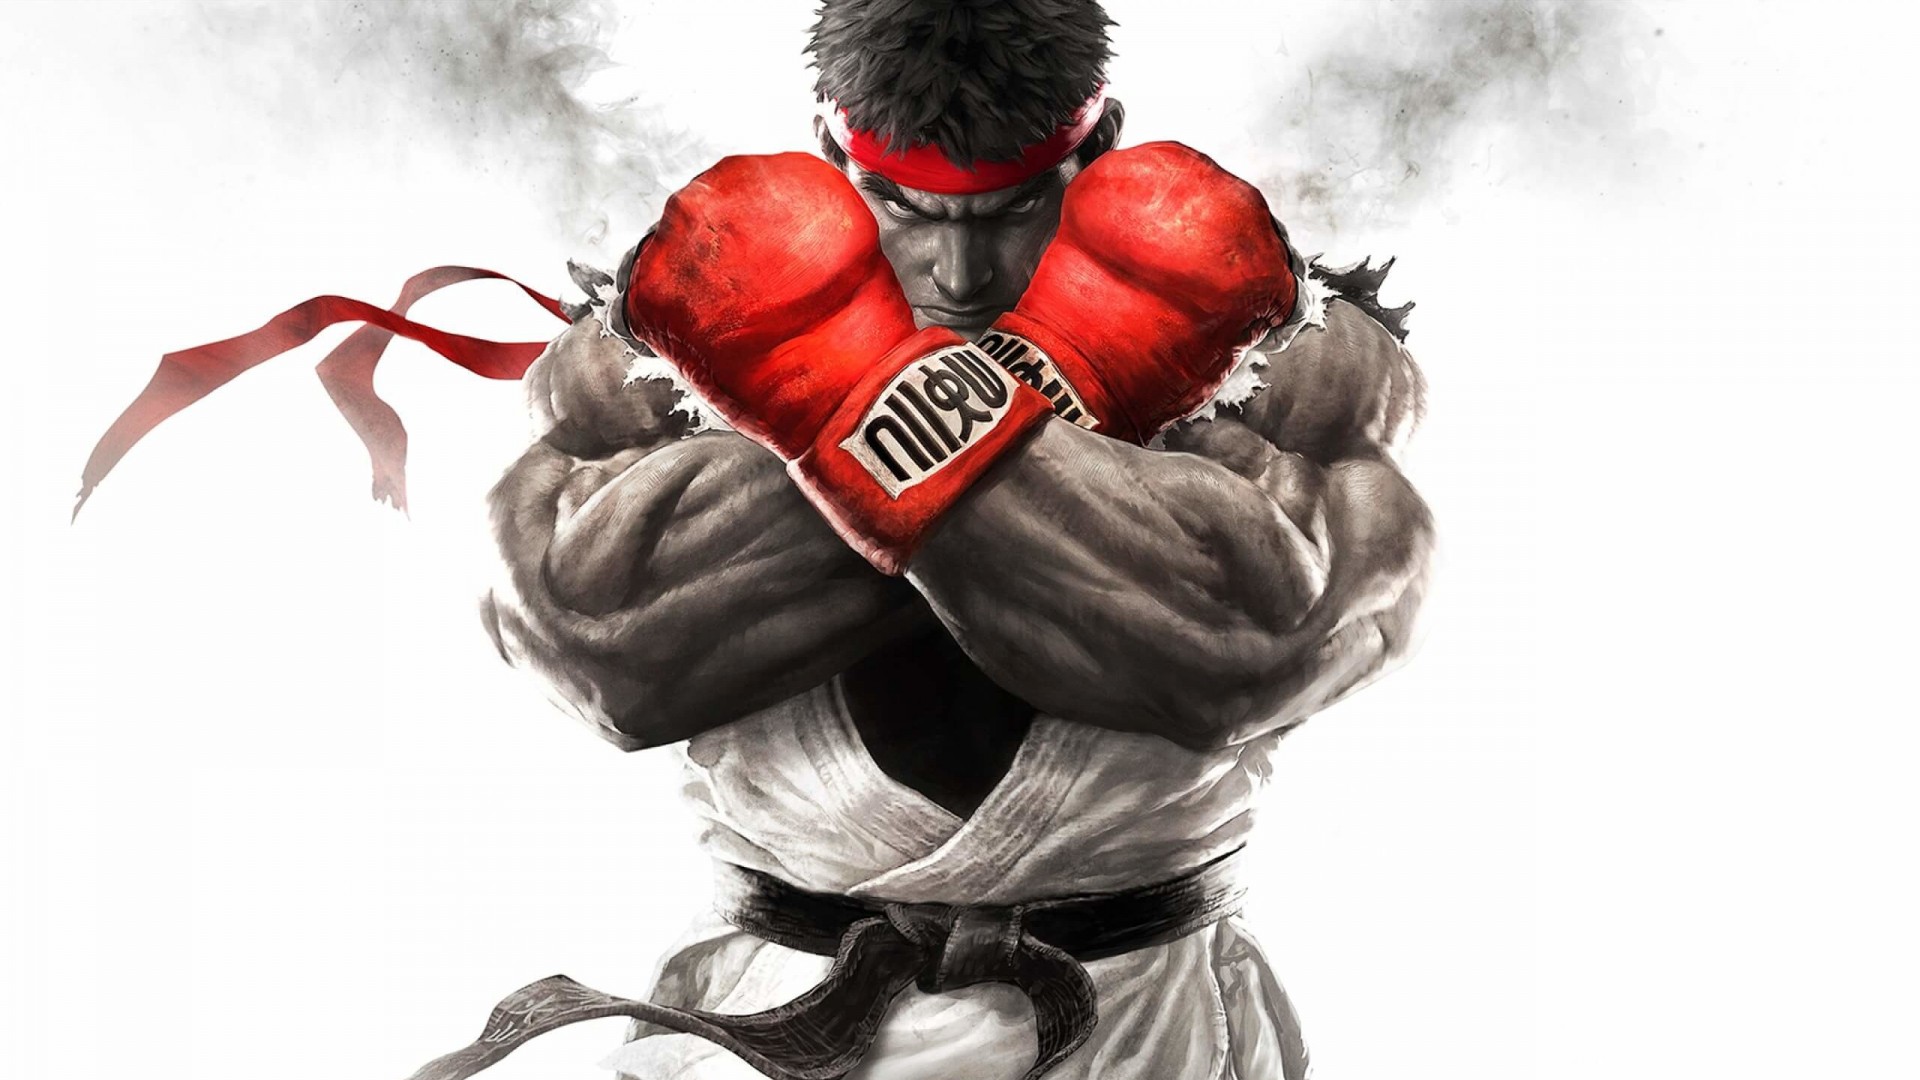 Ryu - Street Fighter Wallpaper for Desktop 1920x1080